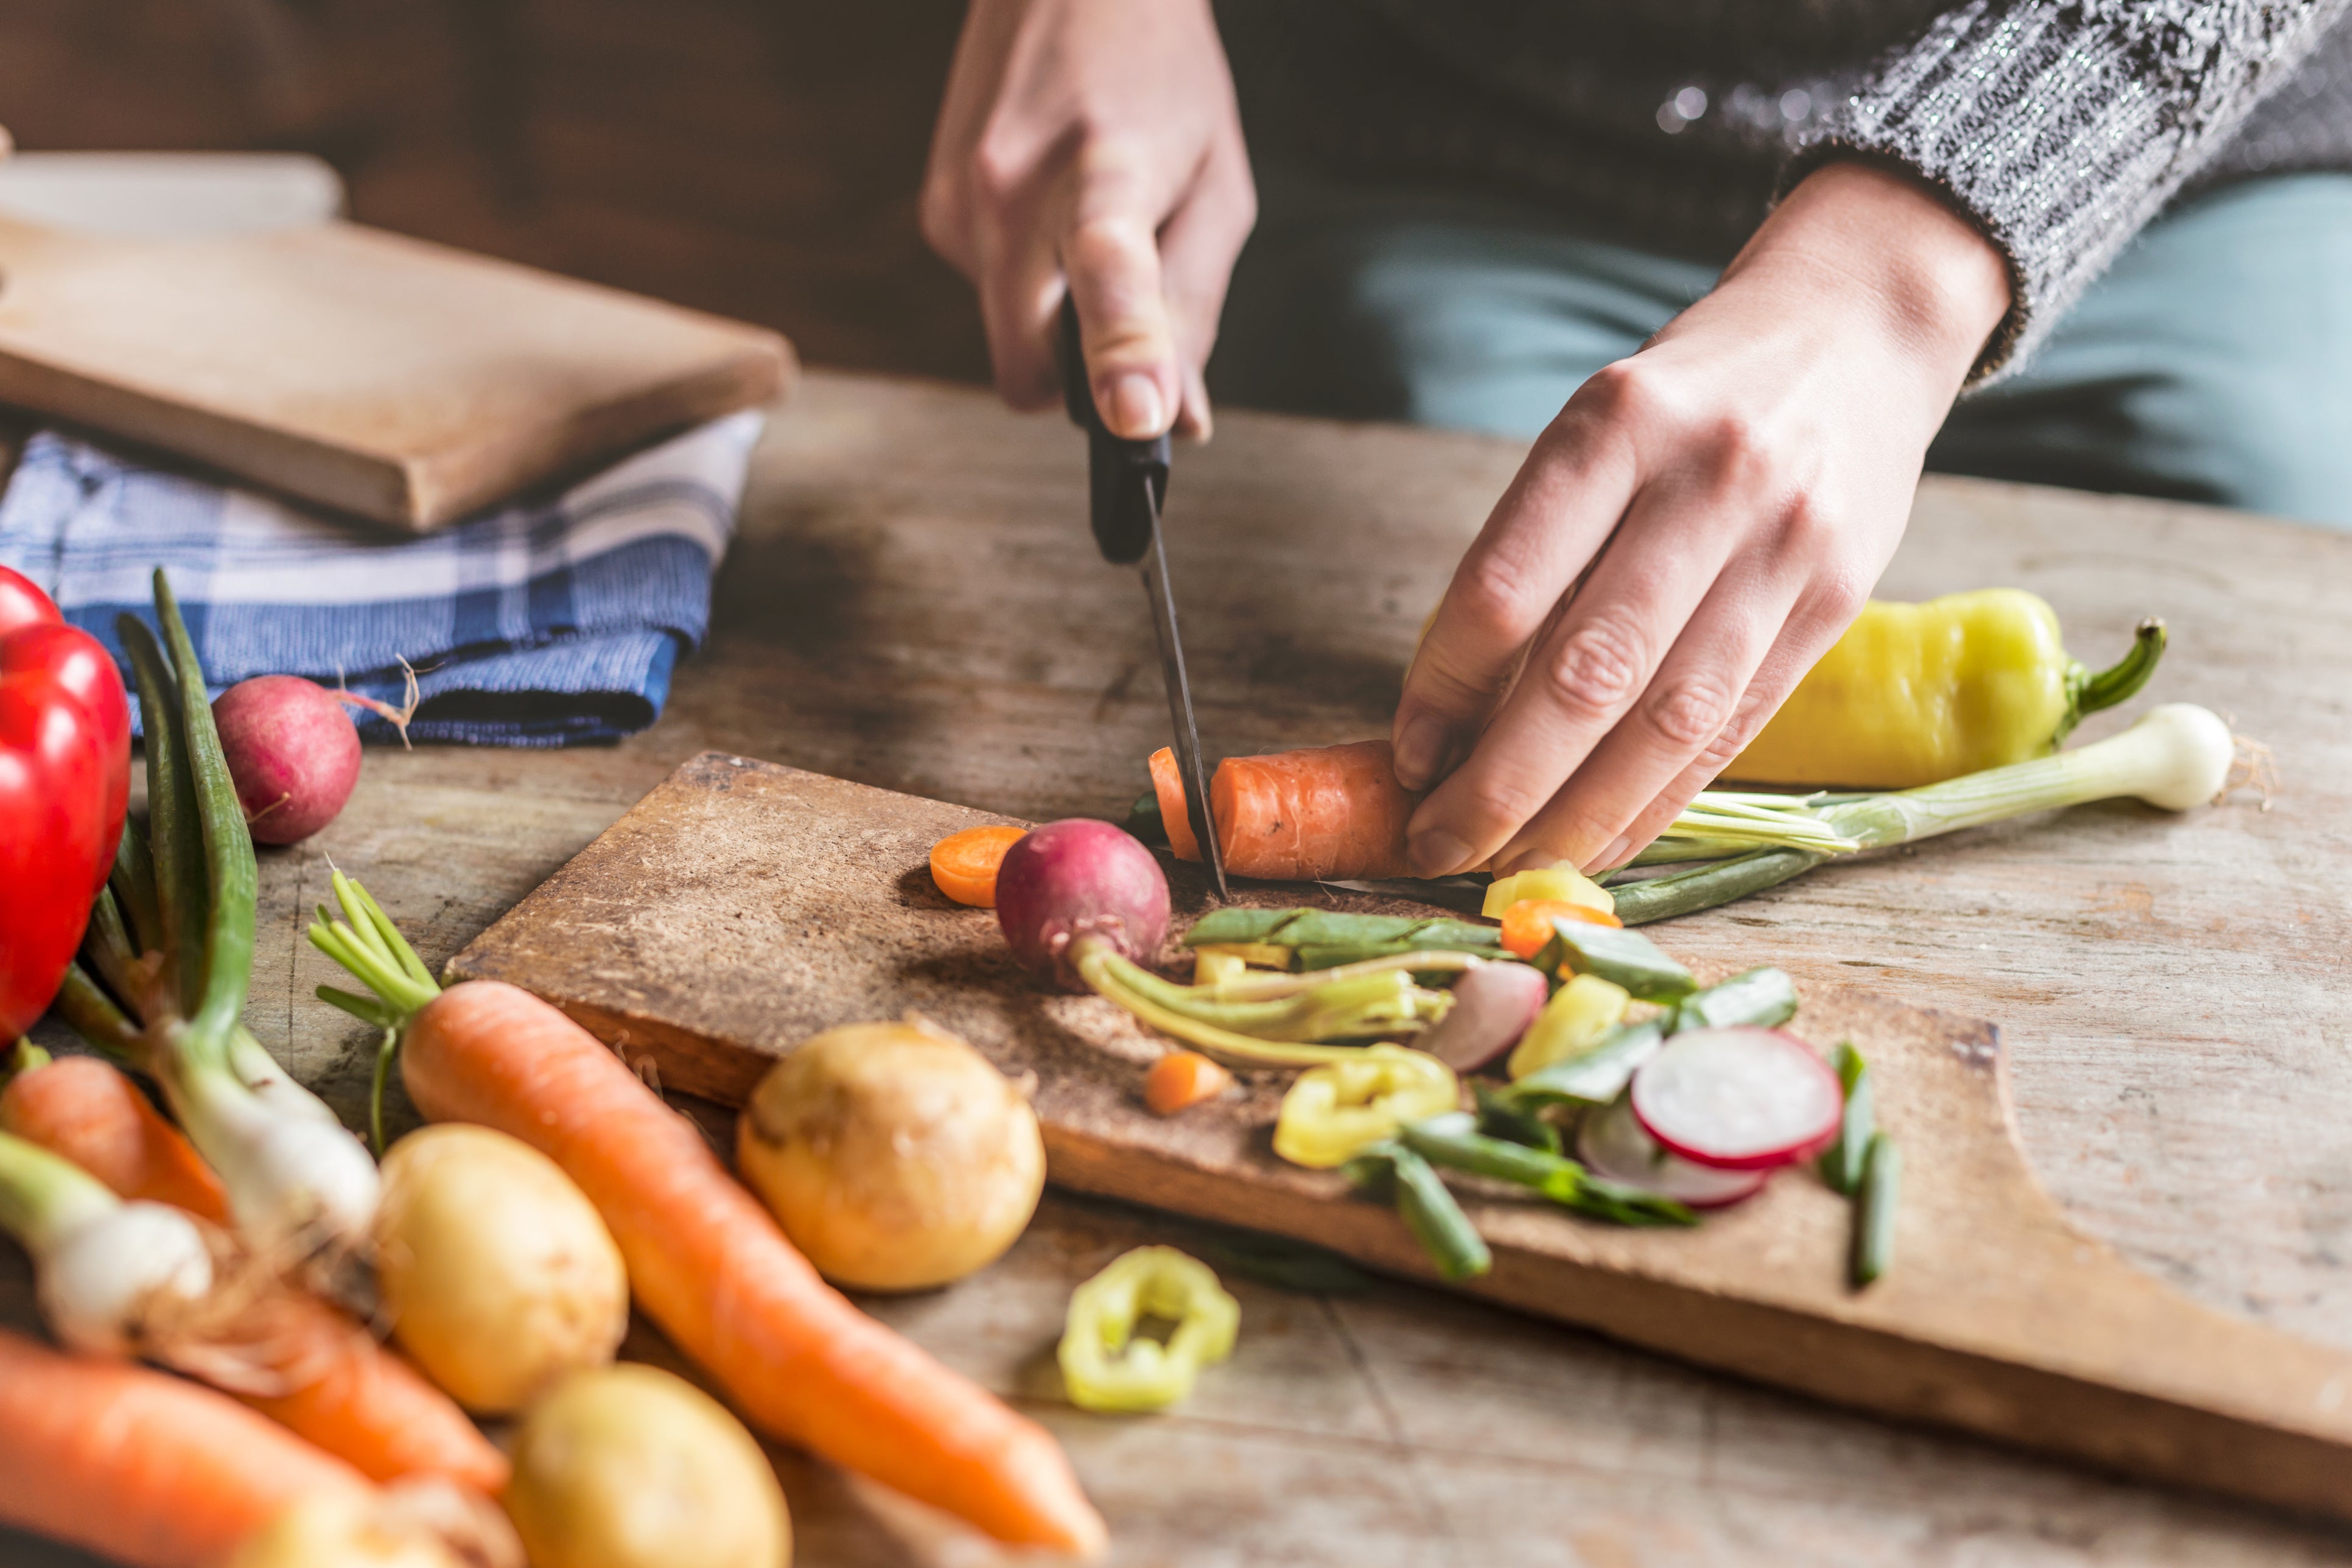 Make quality better. Овощи "кухня". Овощи на столе. Готовка овощей и фруктов. Кухонный стол с овощами.